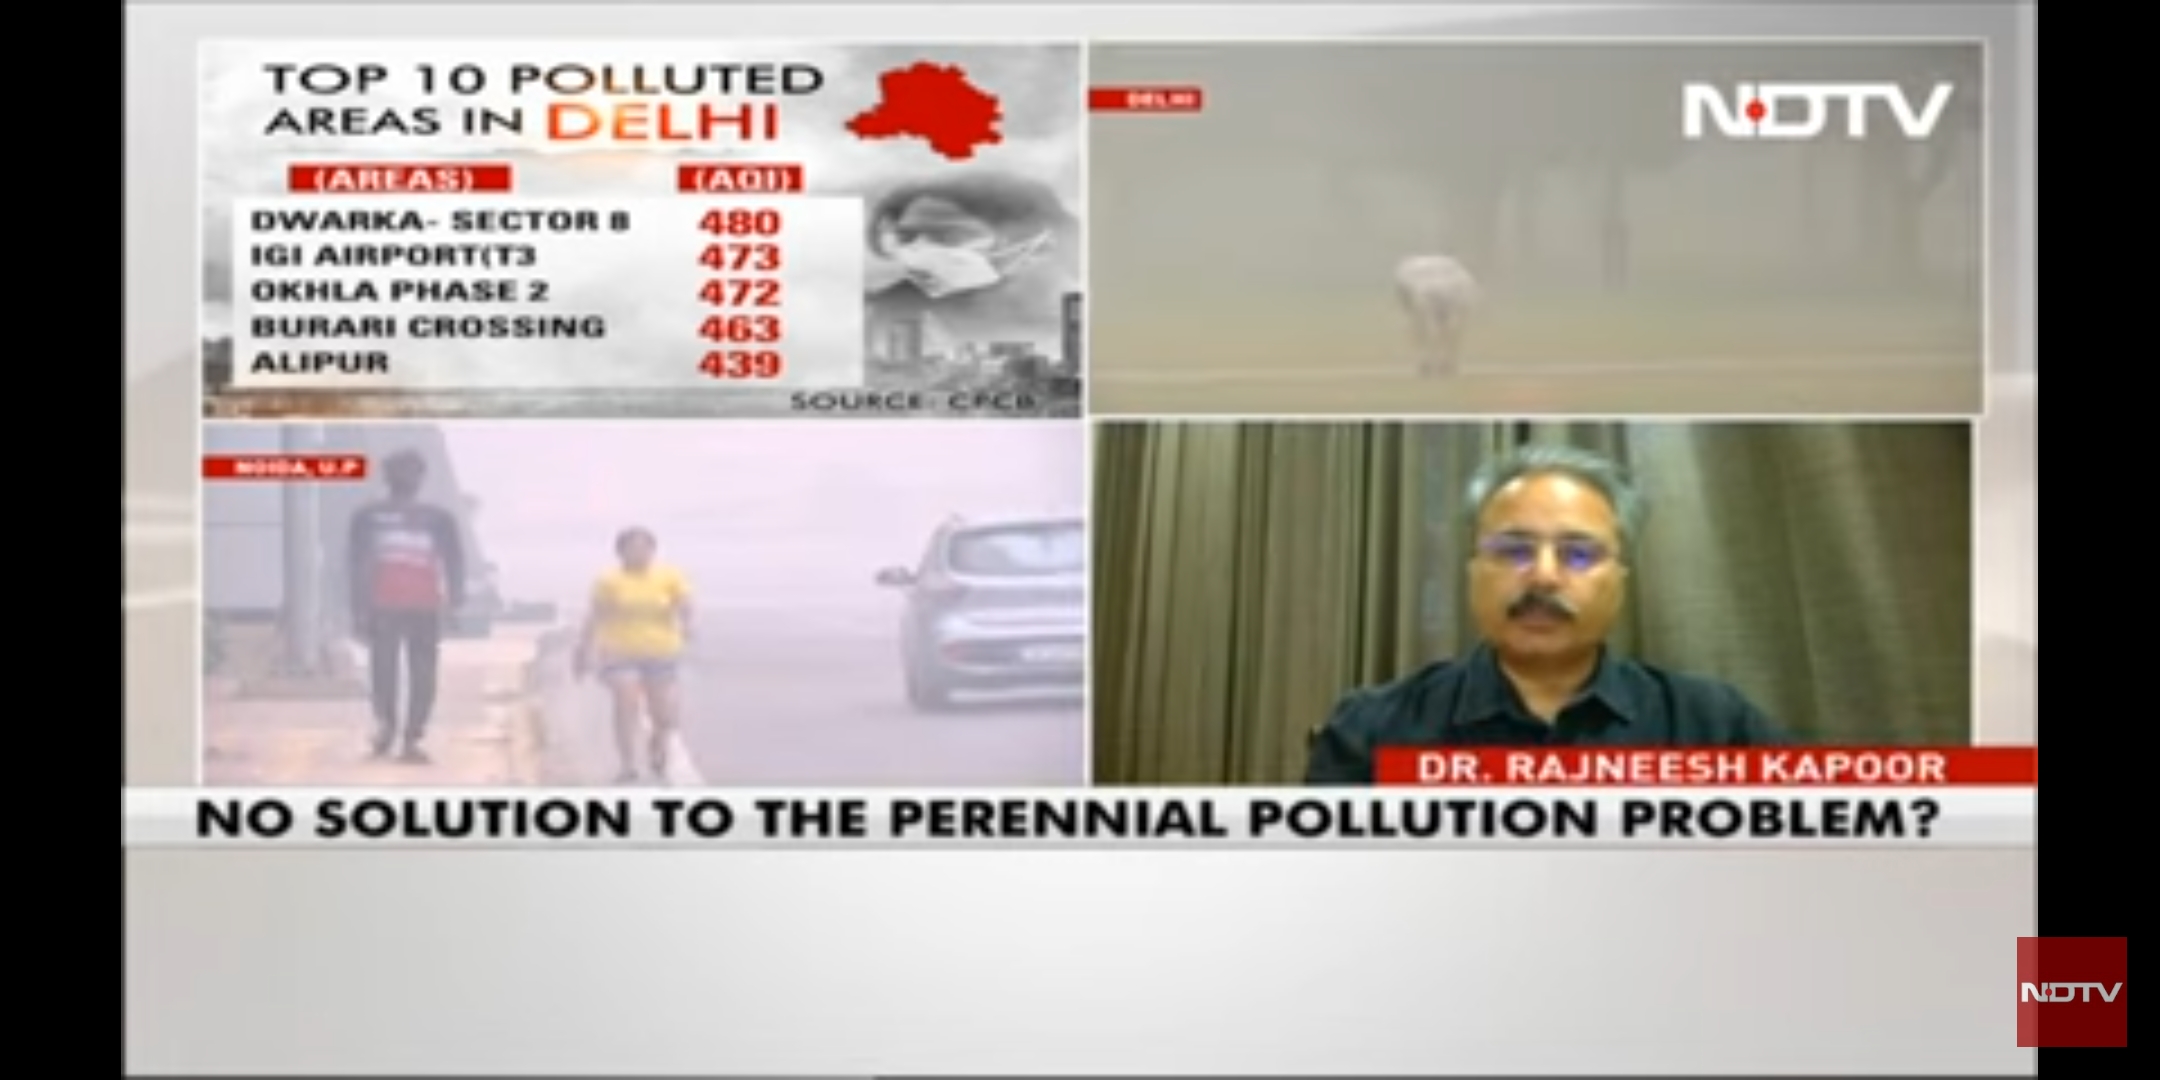 Delhi Air Emergency: Dr Rajneesh Kapoor advises for mask, stay indoor on NDTV broadcast